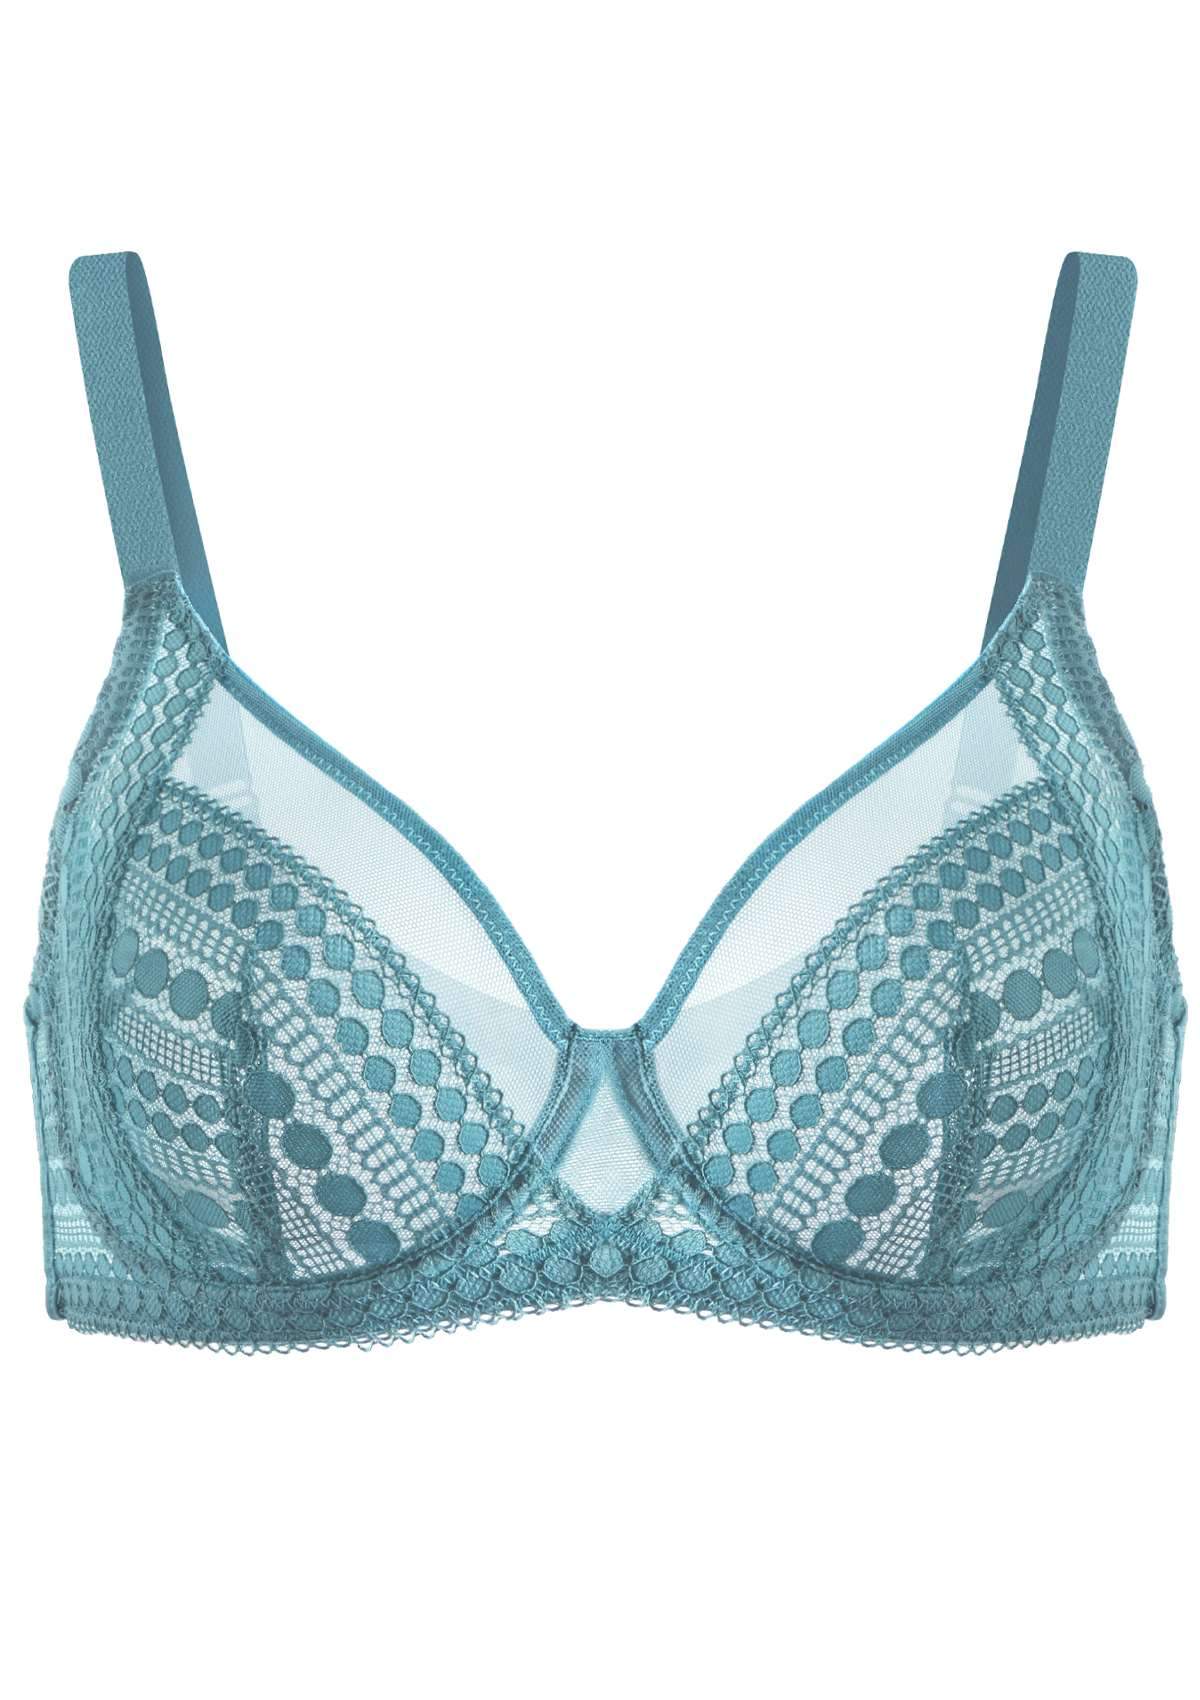 HSIA Heroine Matching Bra And Underwear Set: Bra For Big Boobs - Brittany Blue / 36 / D